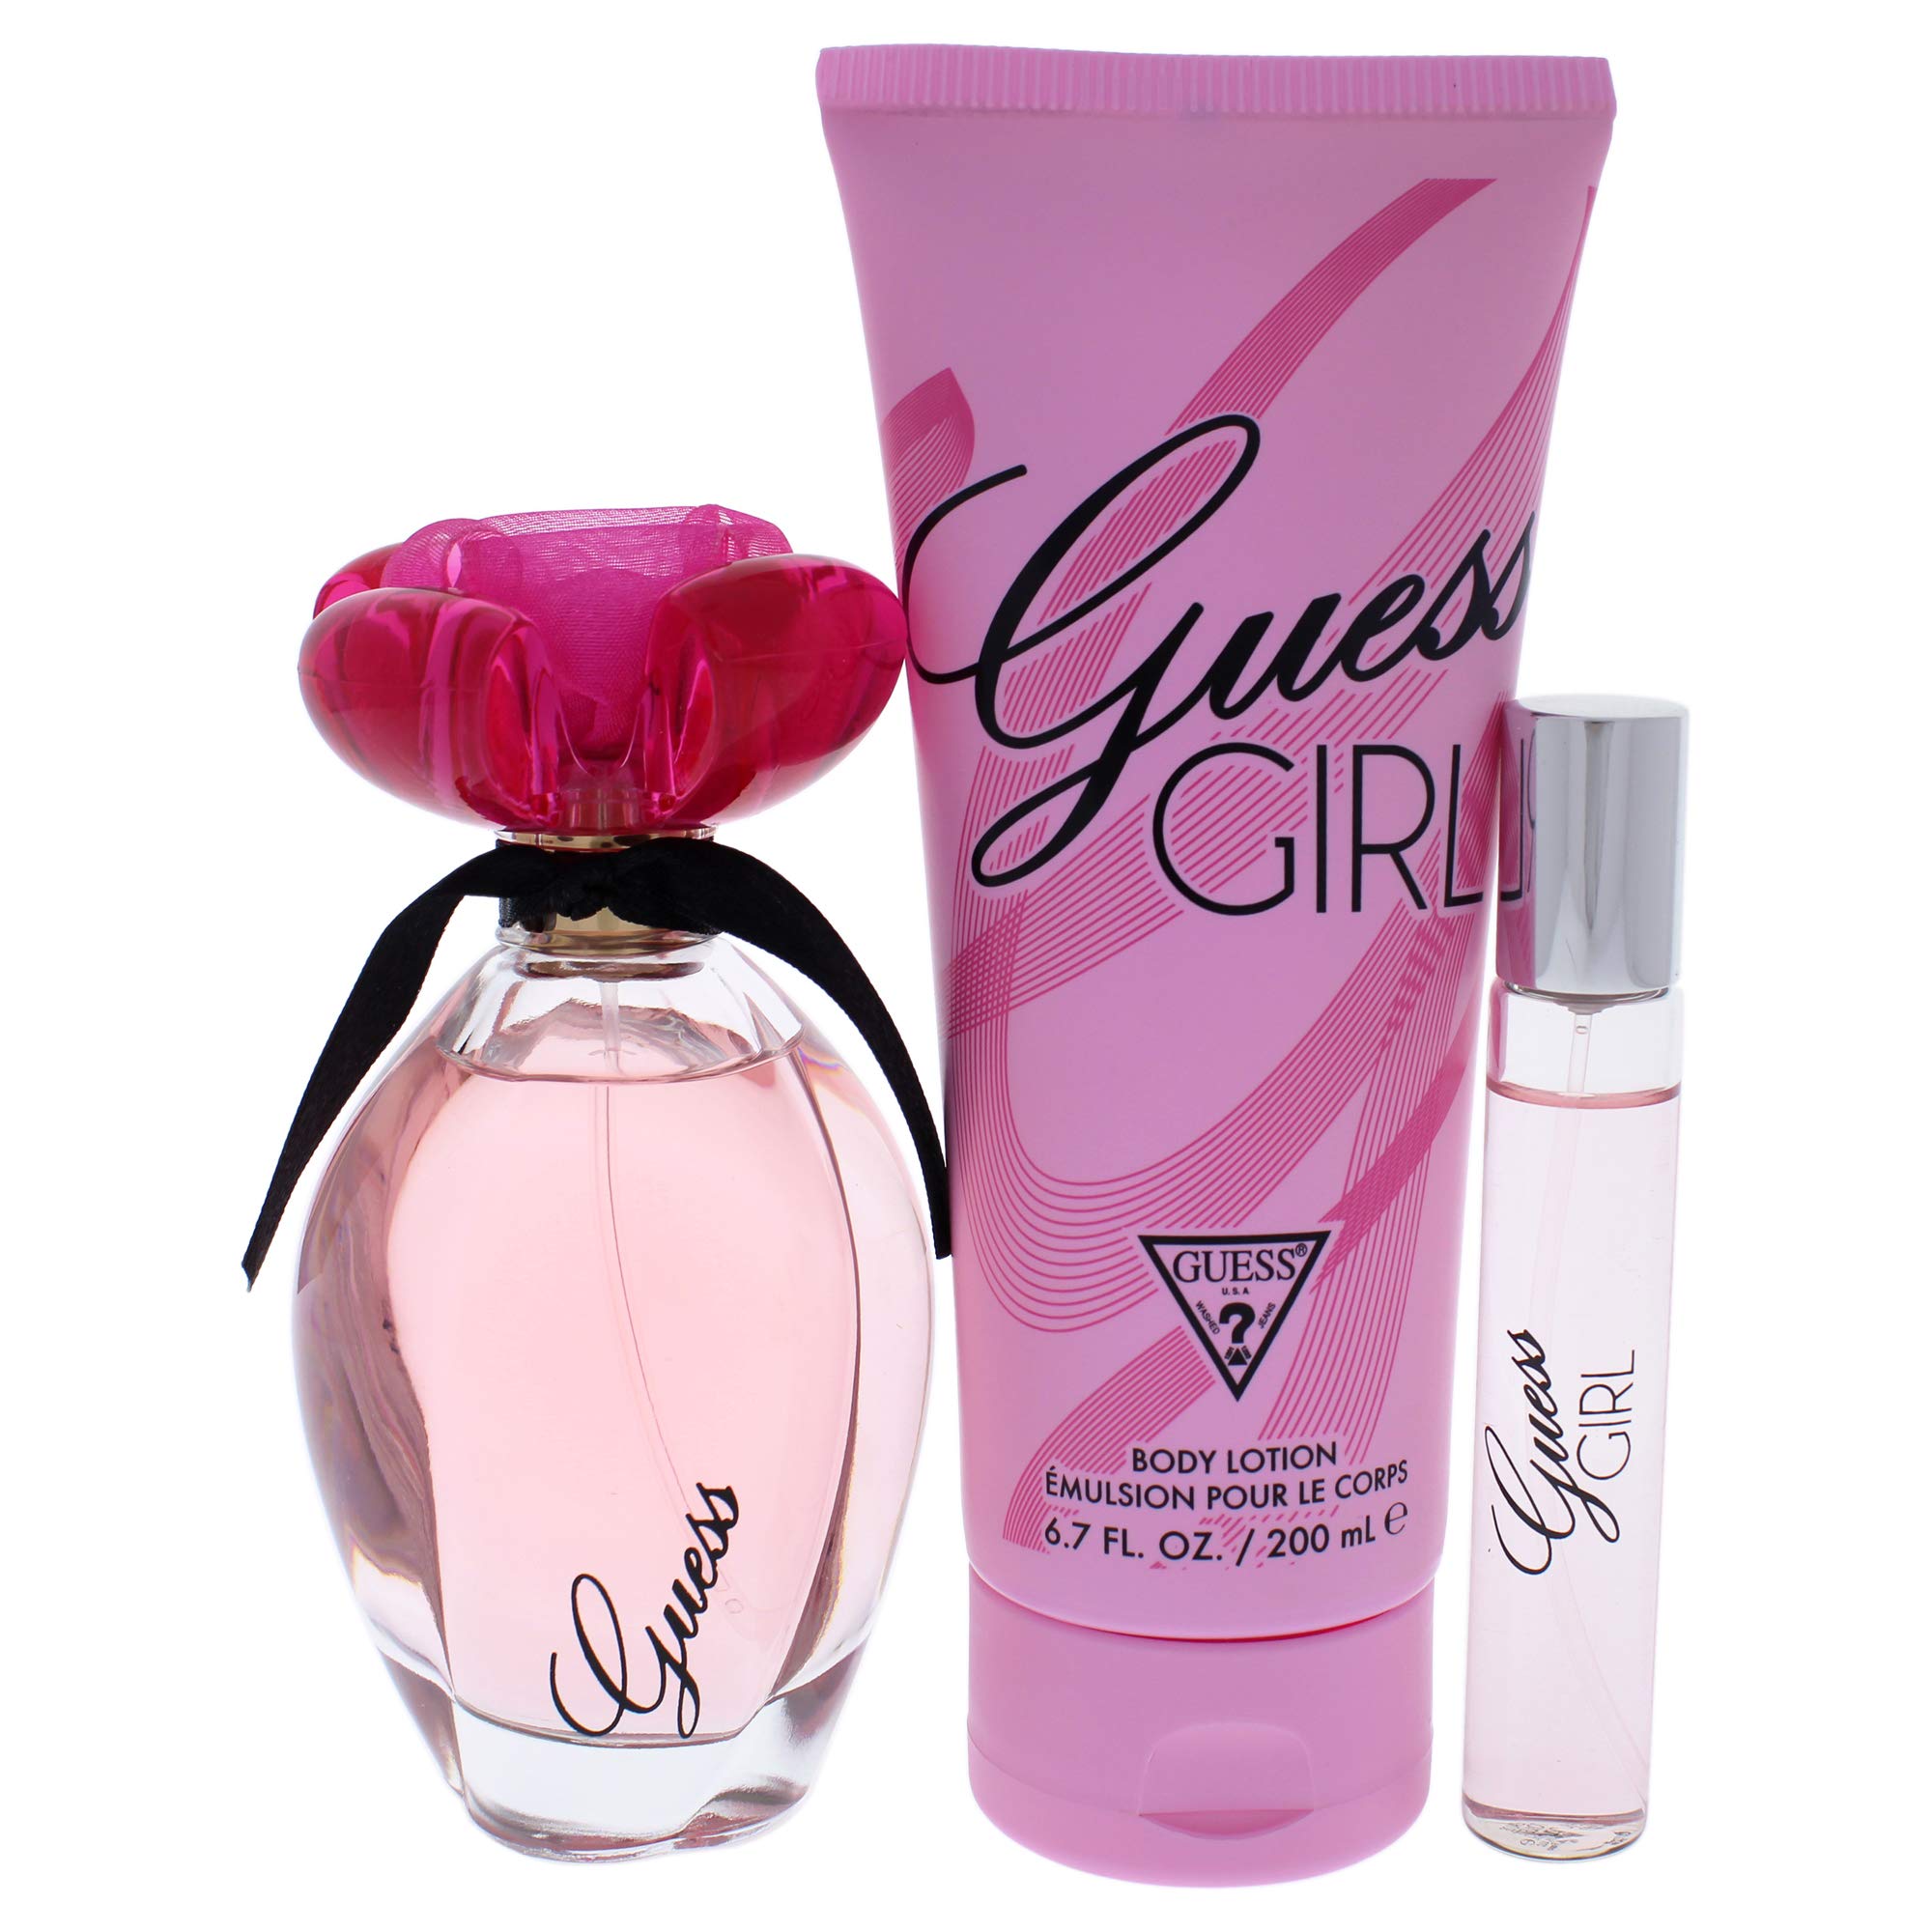 Guess Girl EDT Body Lotion Set For Women | My Perfume Shop Australia